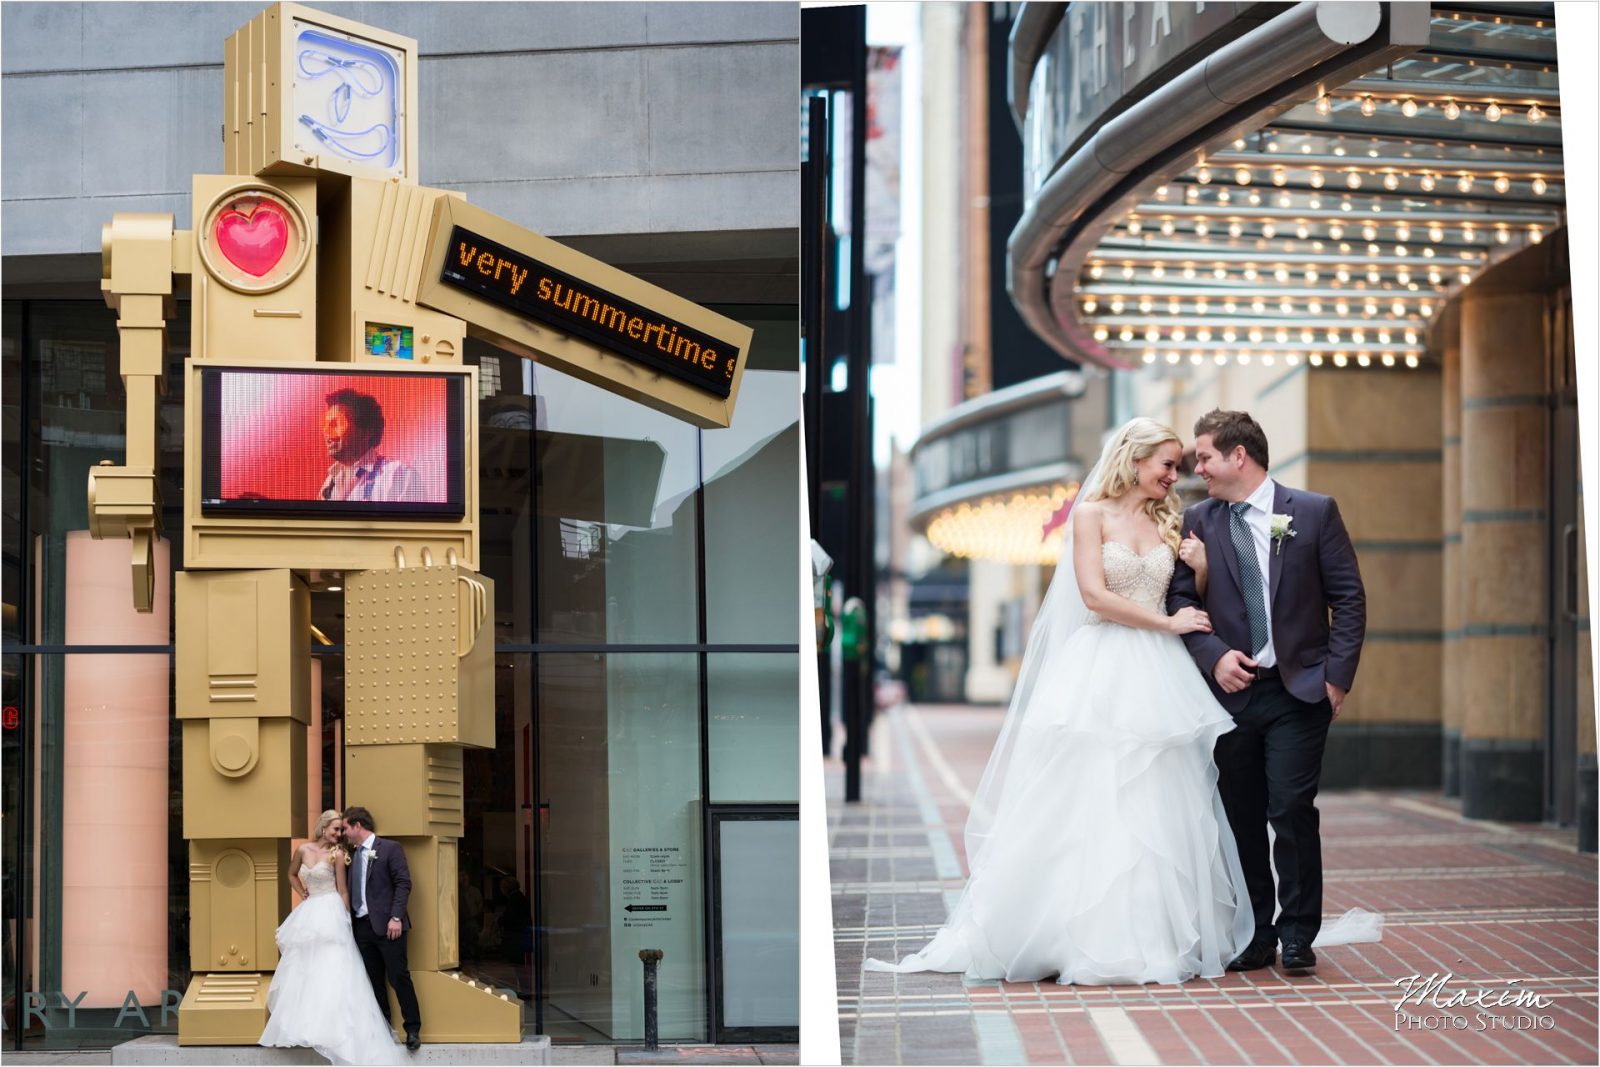 Cincinnati Wedding Photographers 21C Museum Hotel bride groom portraits